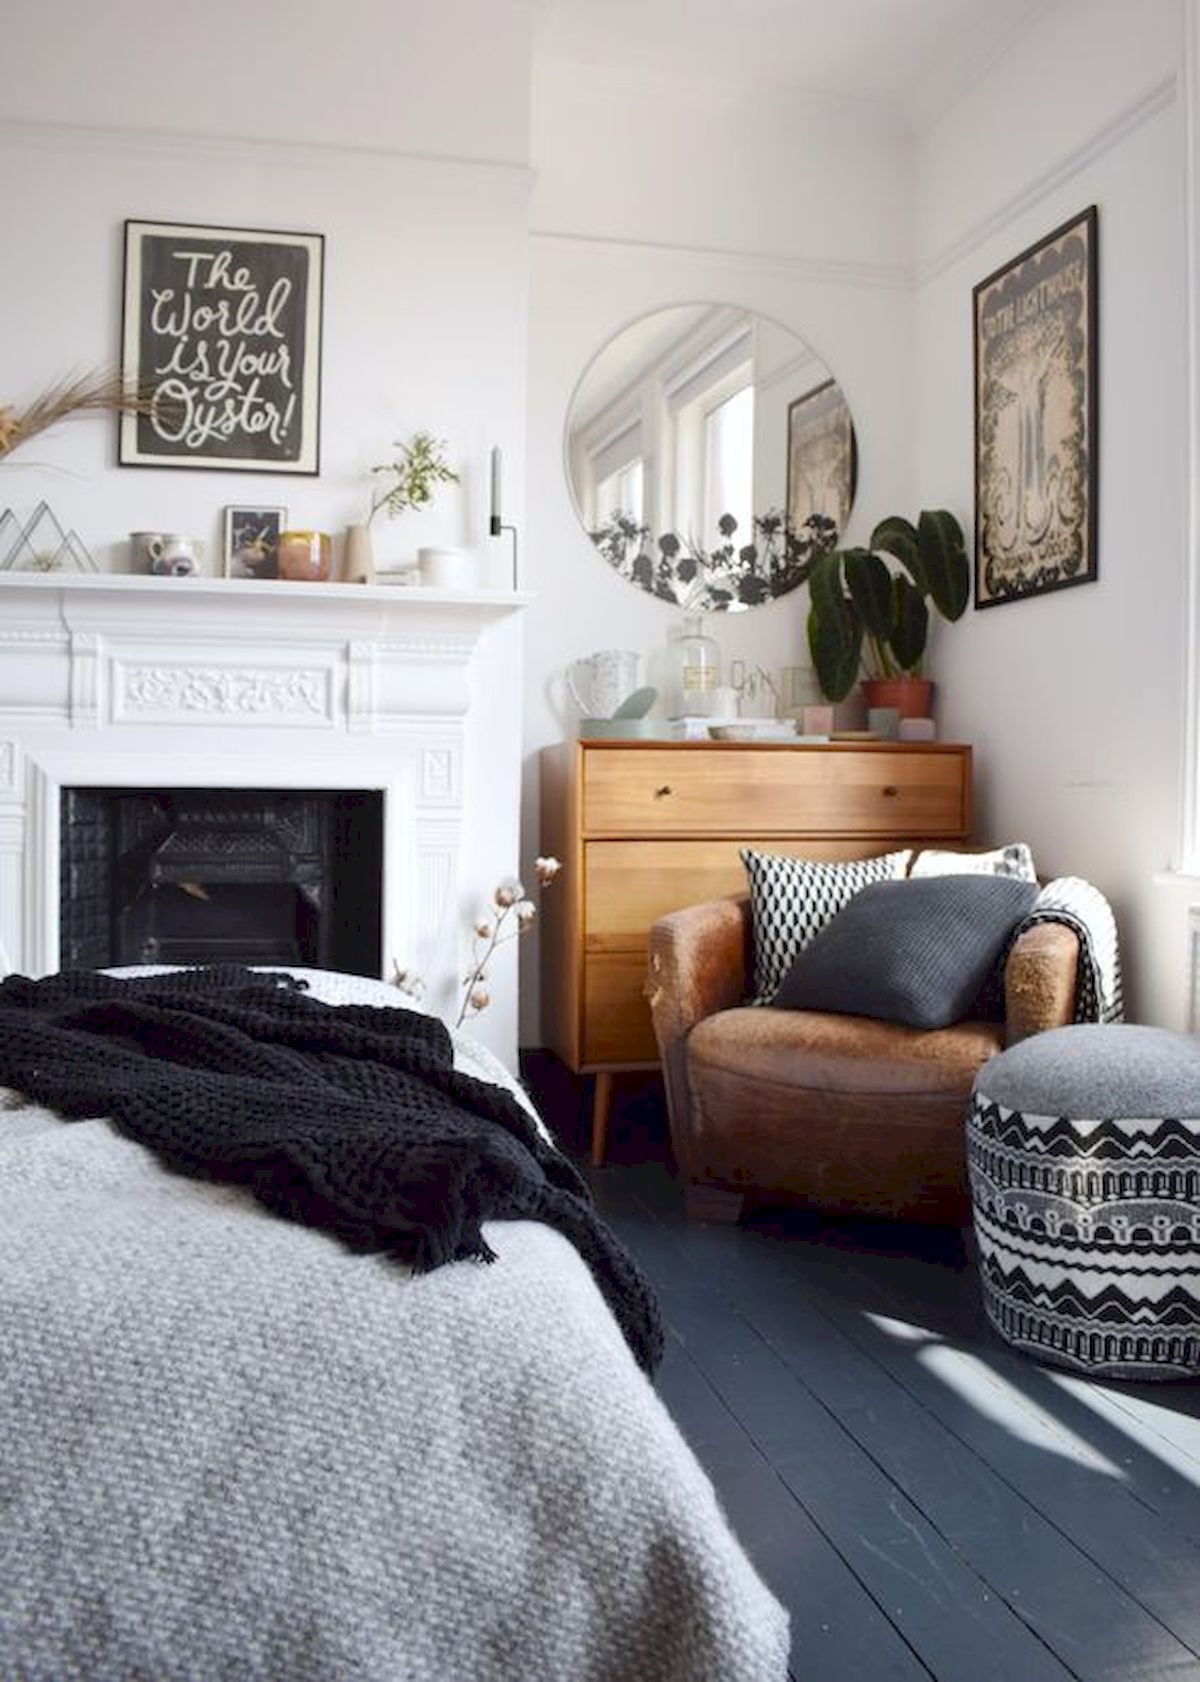 60 Beautiful Bedroom Decor And Design Ideas (41)